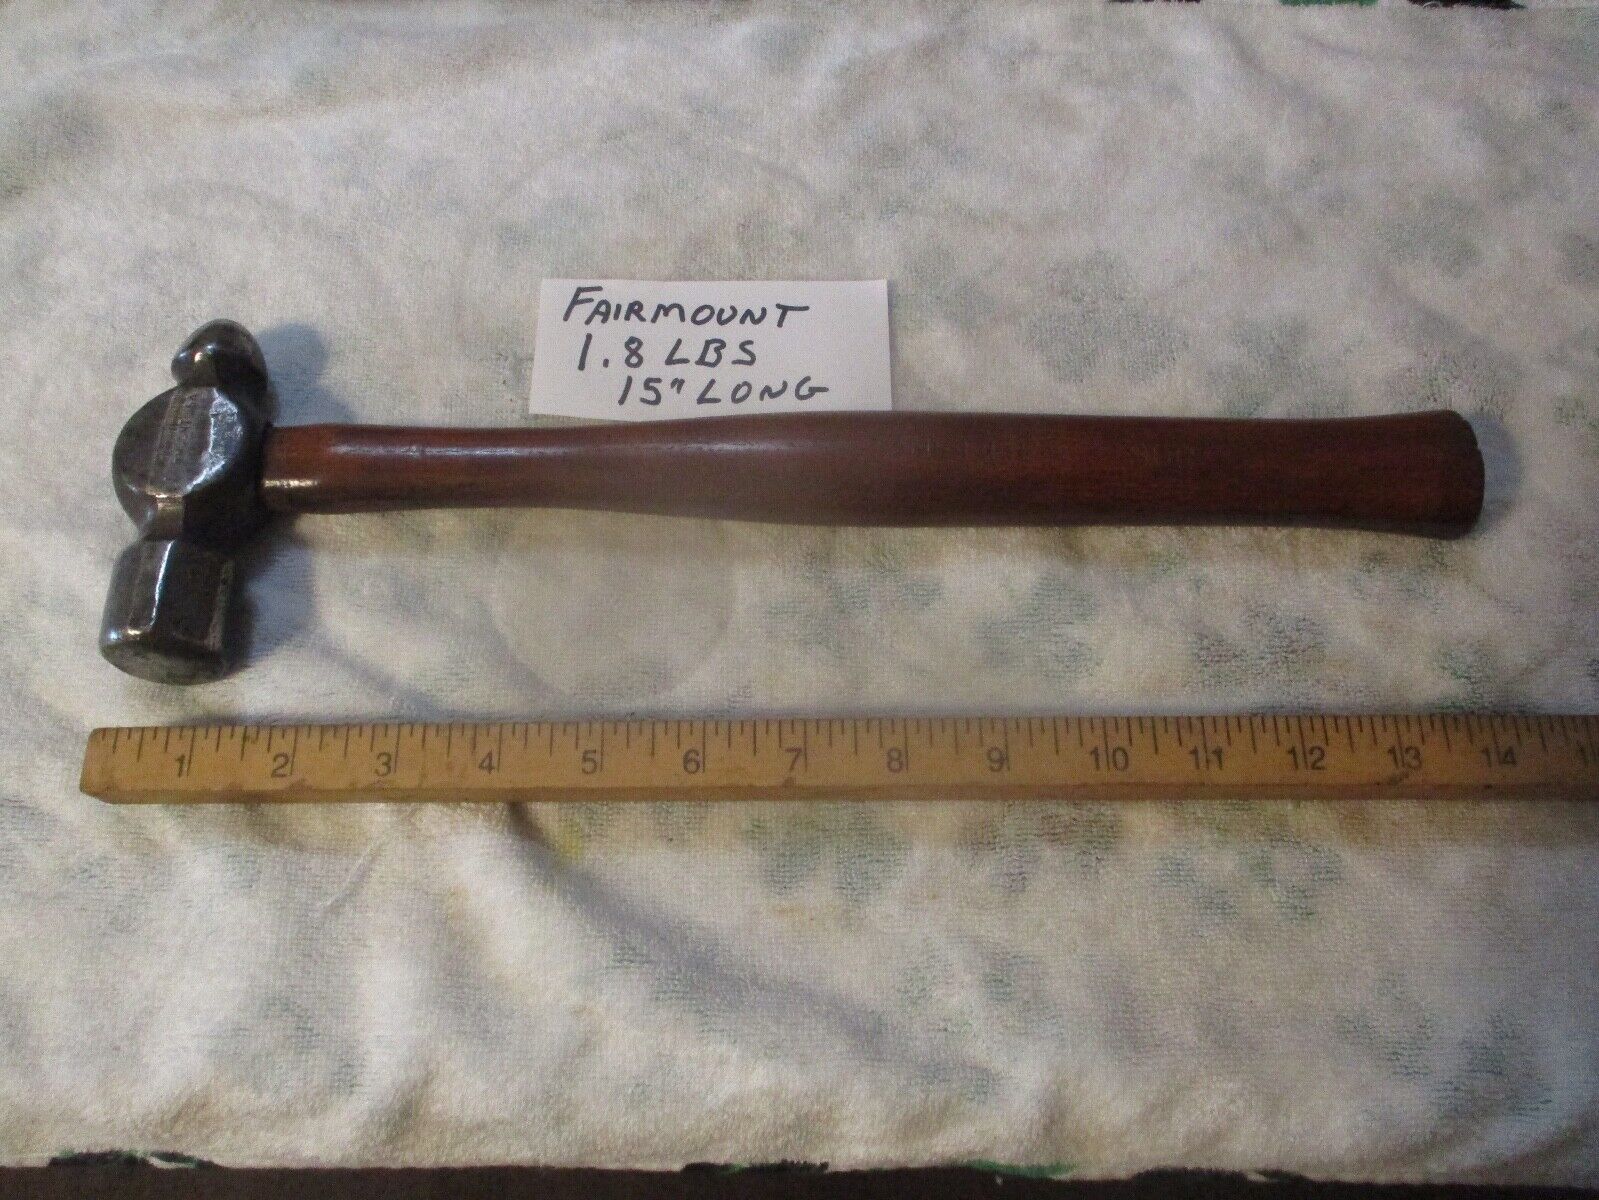 Vintage Fairmount 1.8lb Ball Peen Type Hammer Excellant